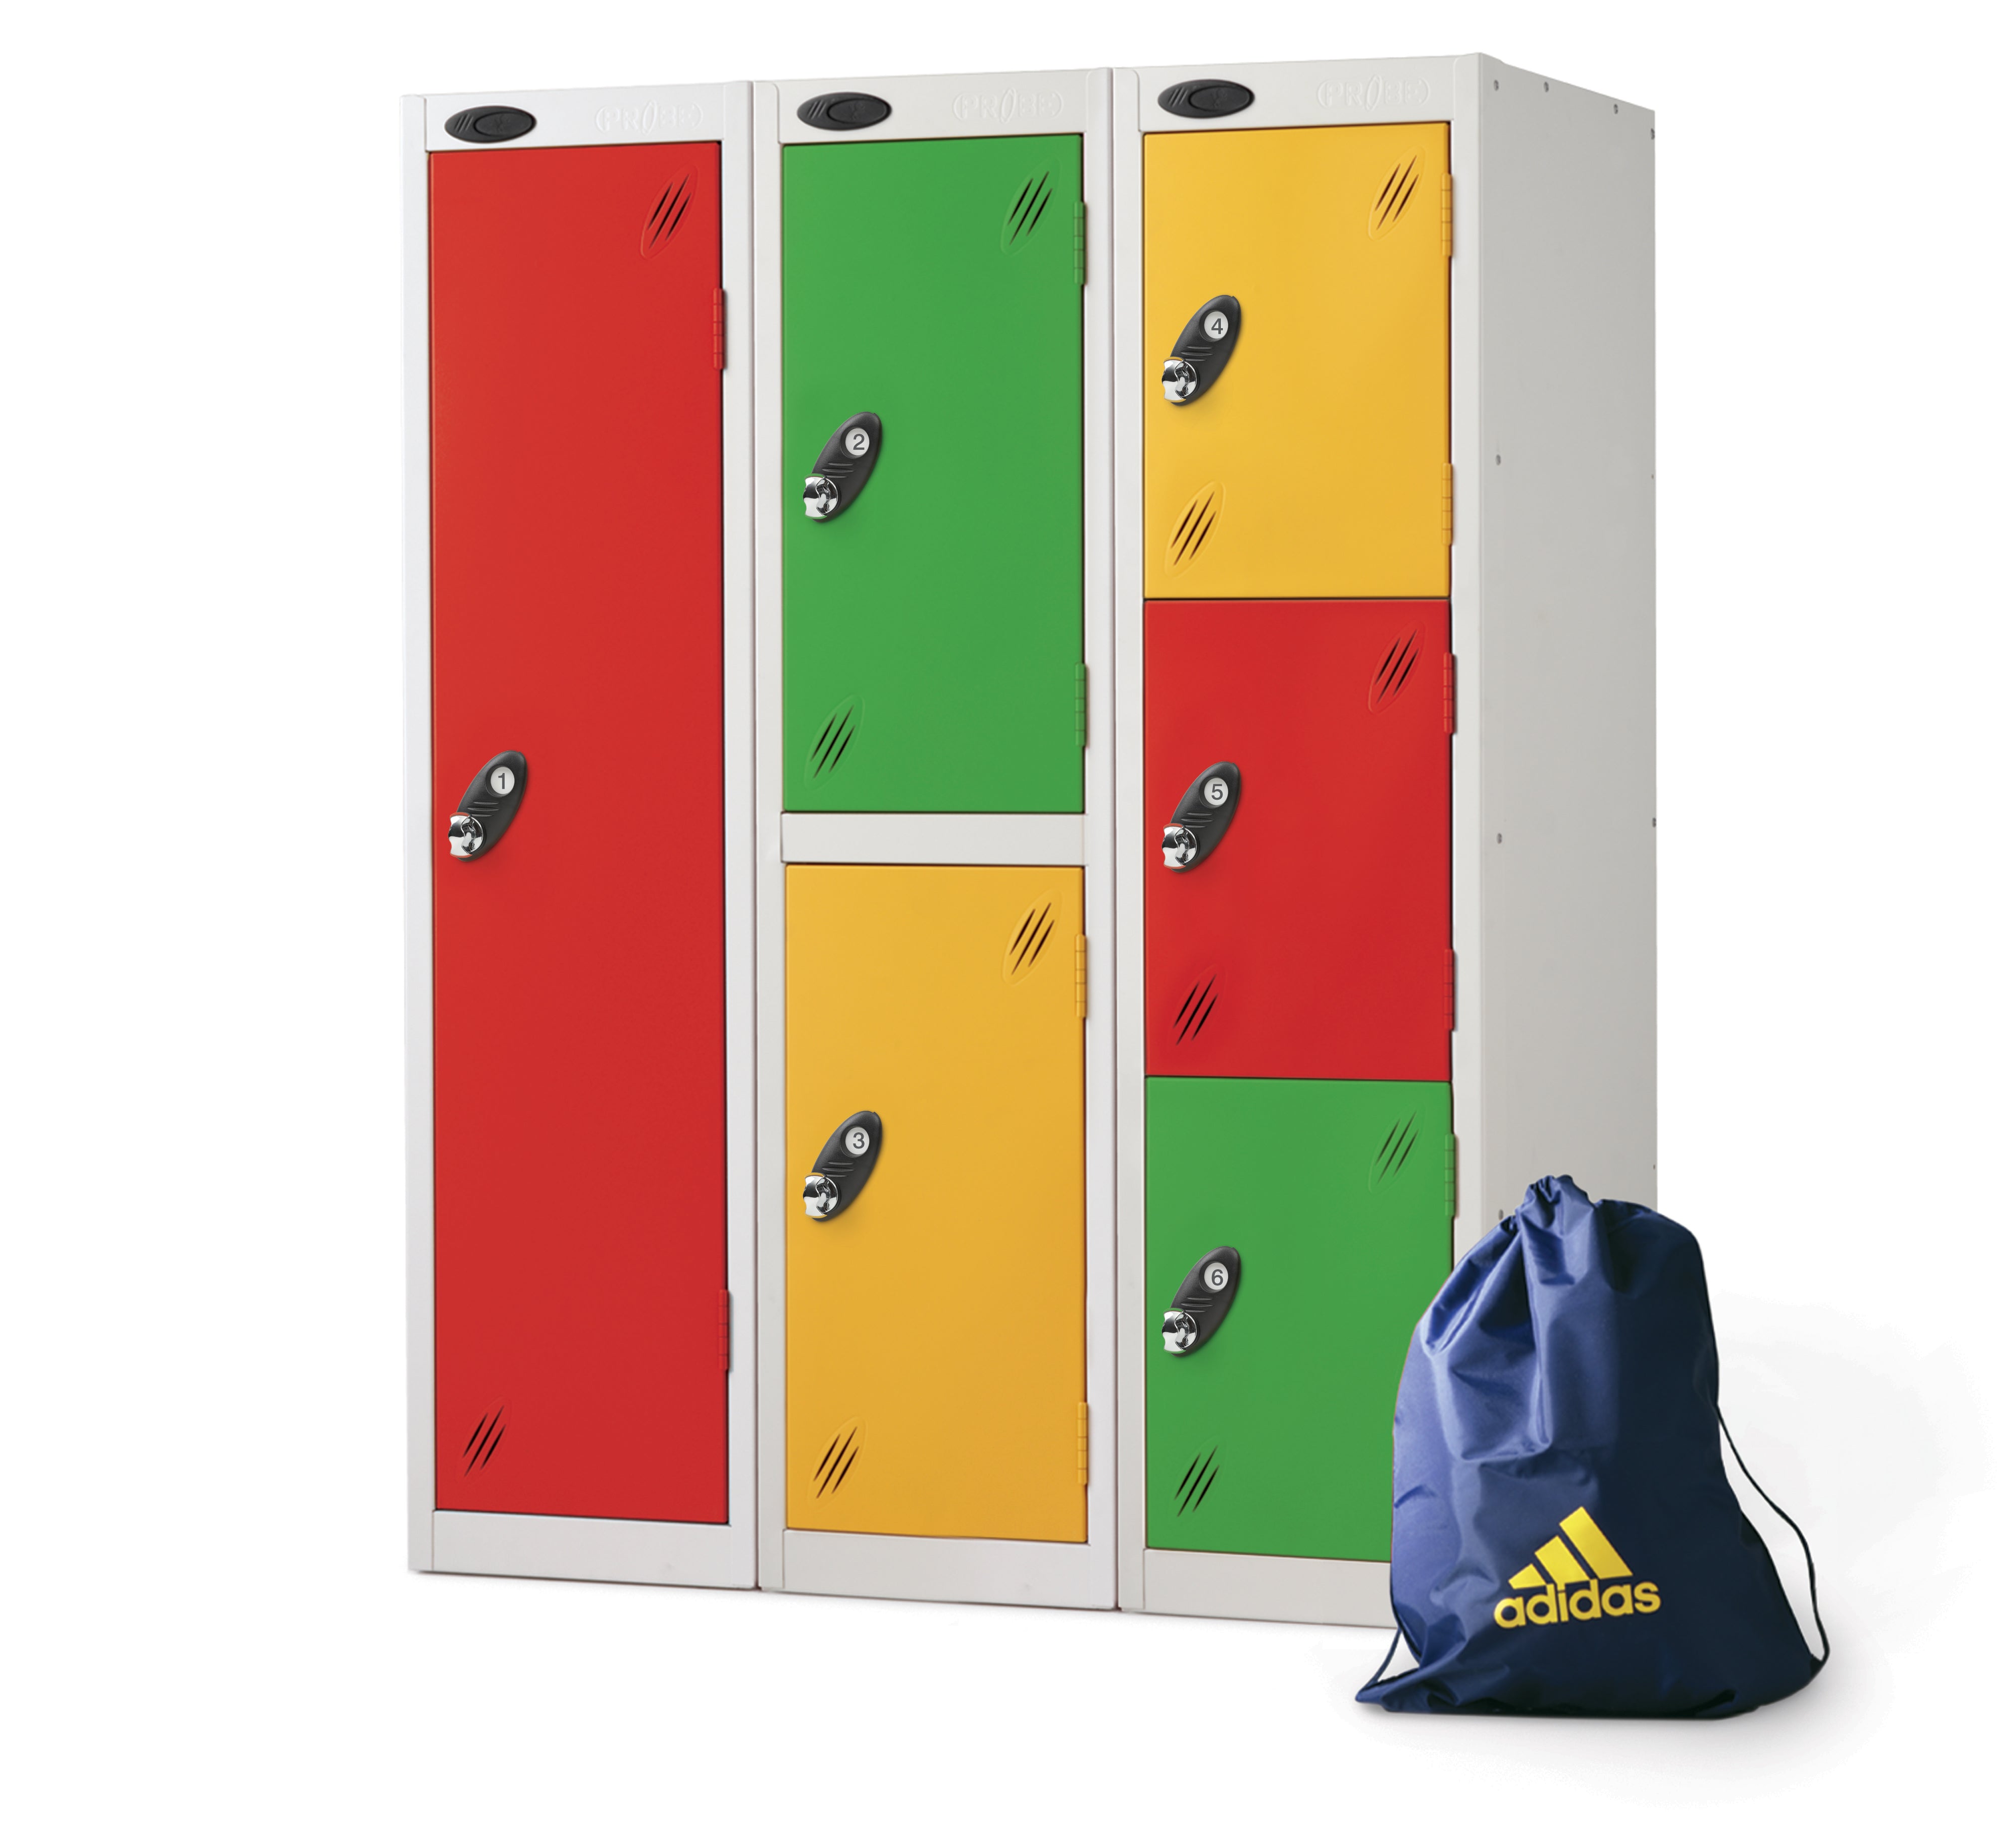 PROBELOW LOW LEVEL 1 NEST STEEL LOCKERS - JET BLACK 3 DOOR Storage Lockers > Lockers > Cabinets > Storage > Probe > One Stop For Safety   